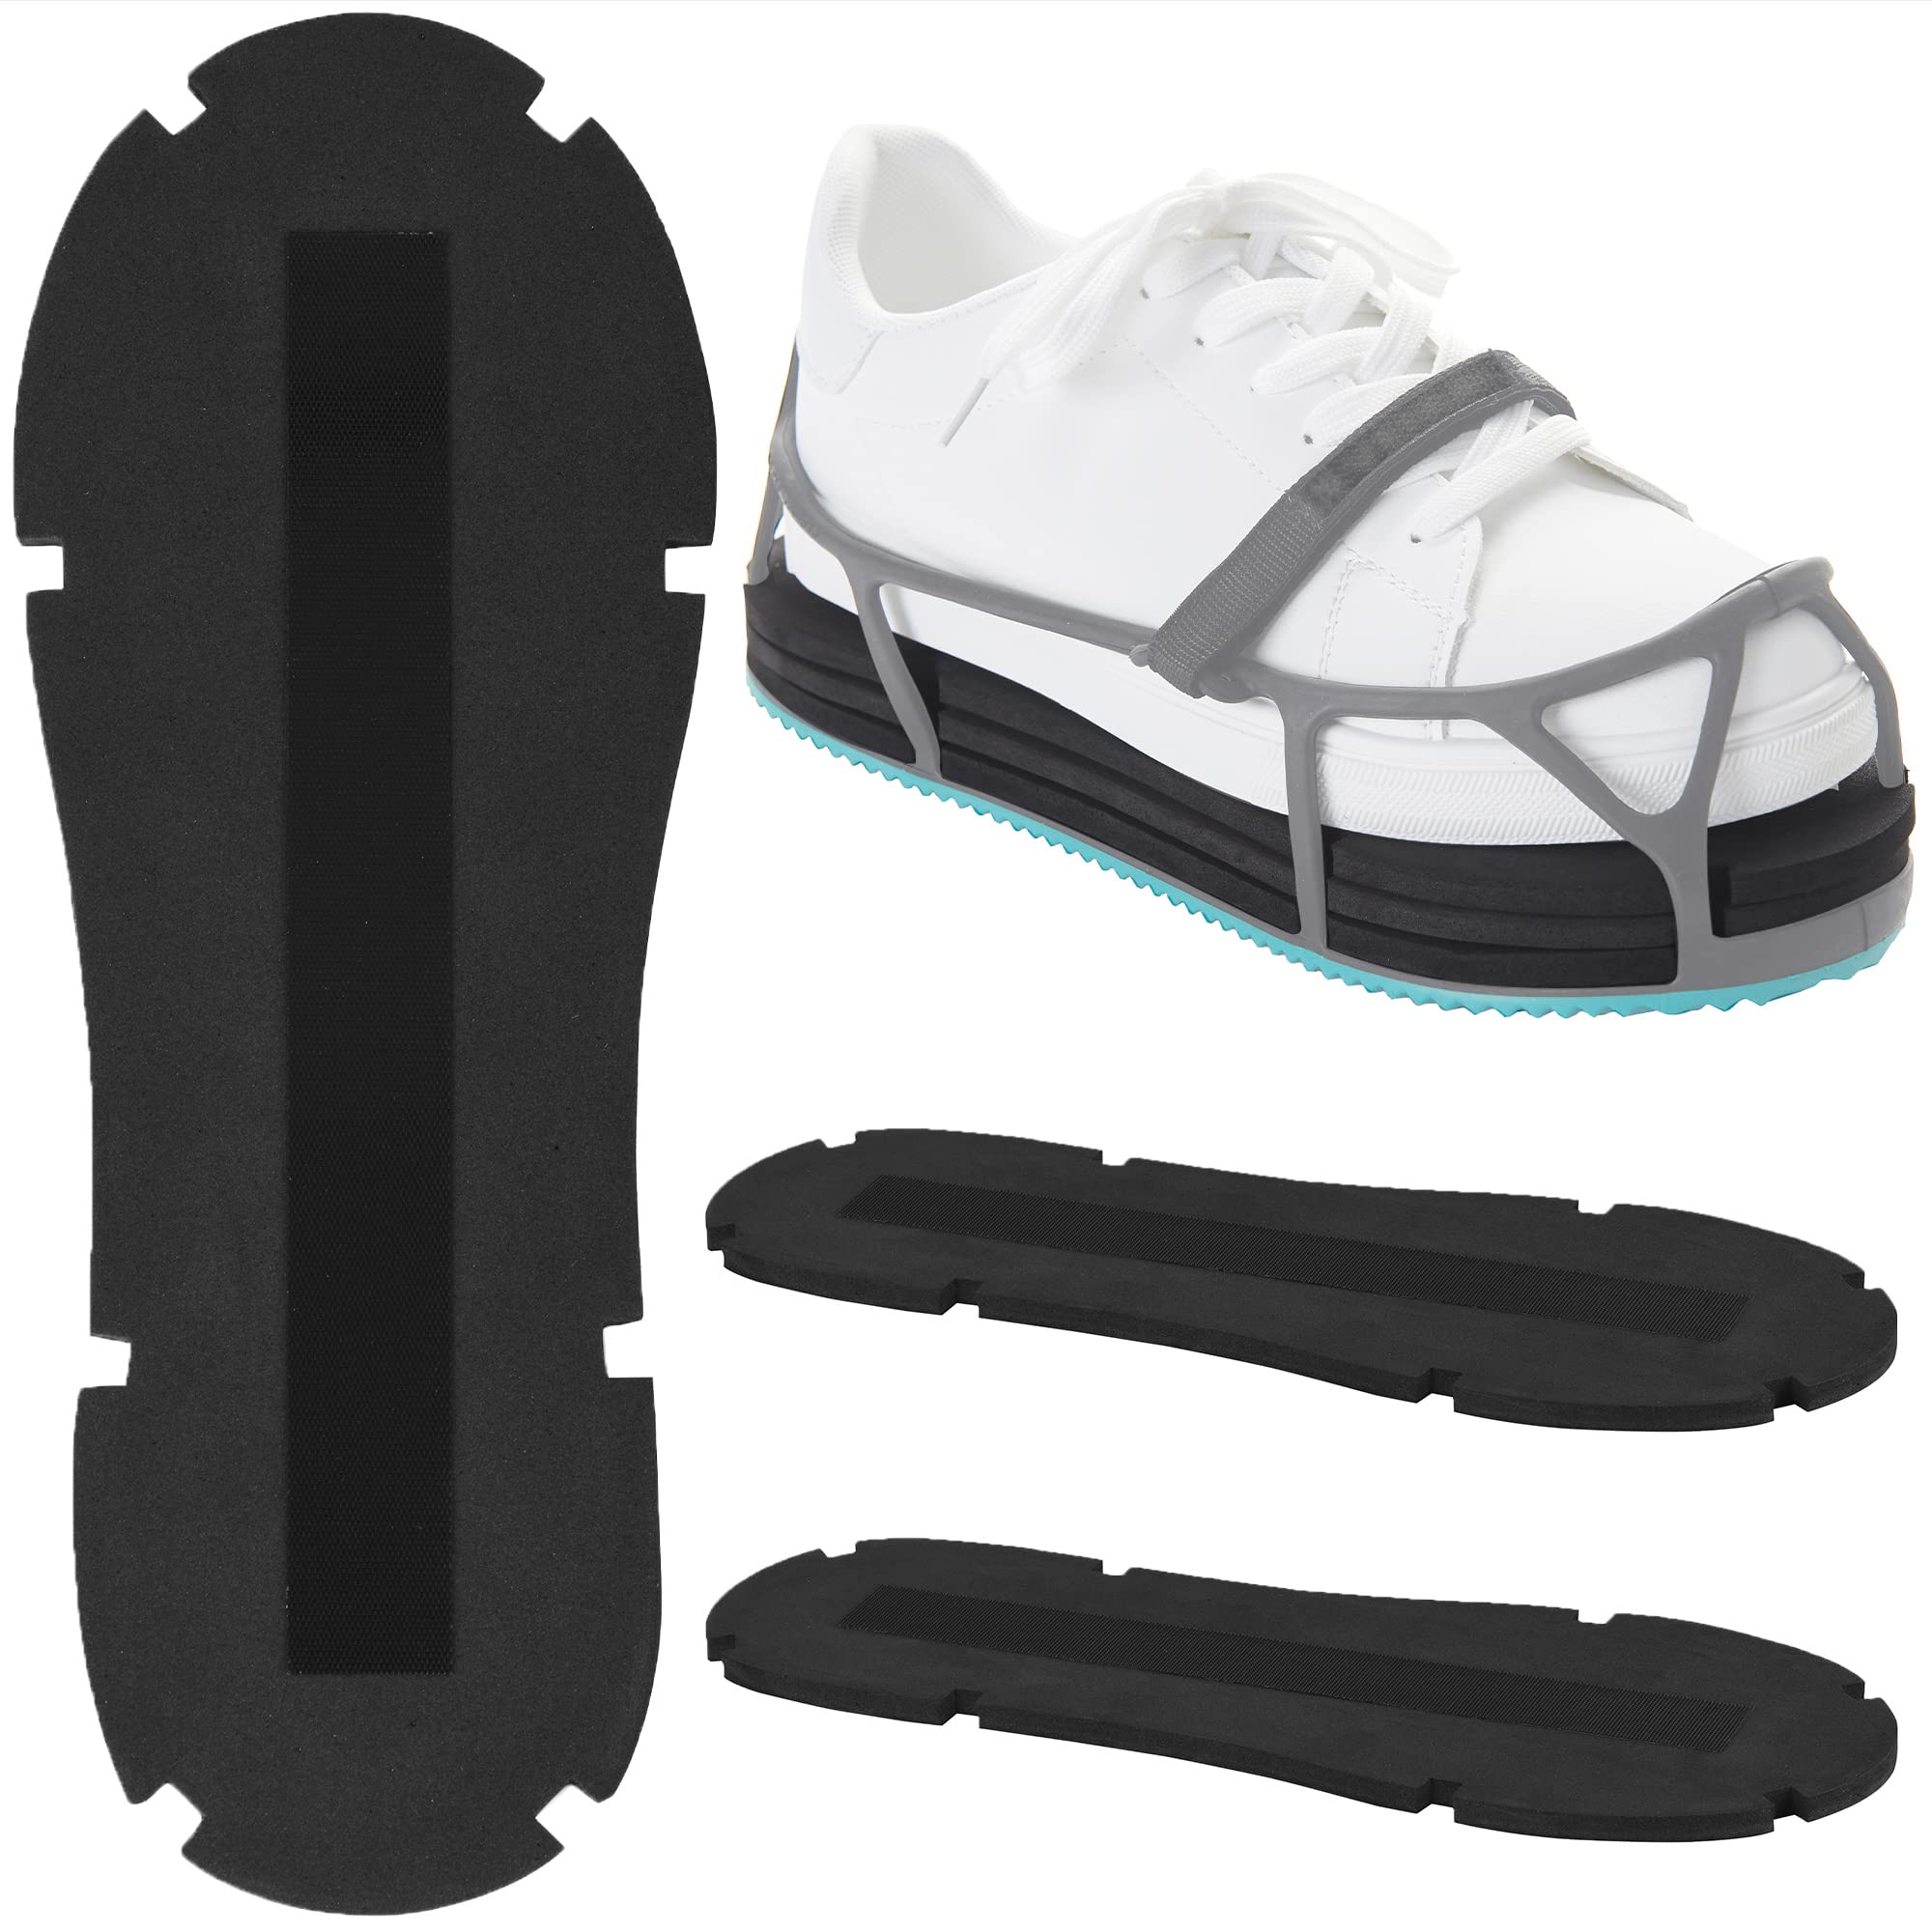 3 Pack] Shoe Inserts for EVENup Shoe Balancer/Leveler - Small 1/4